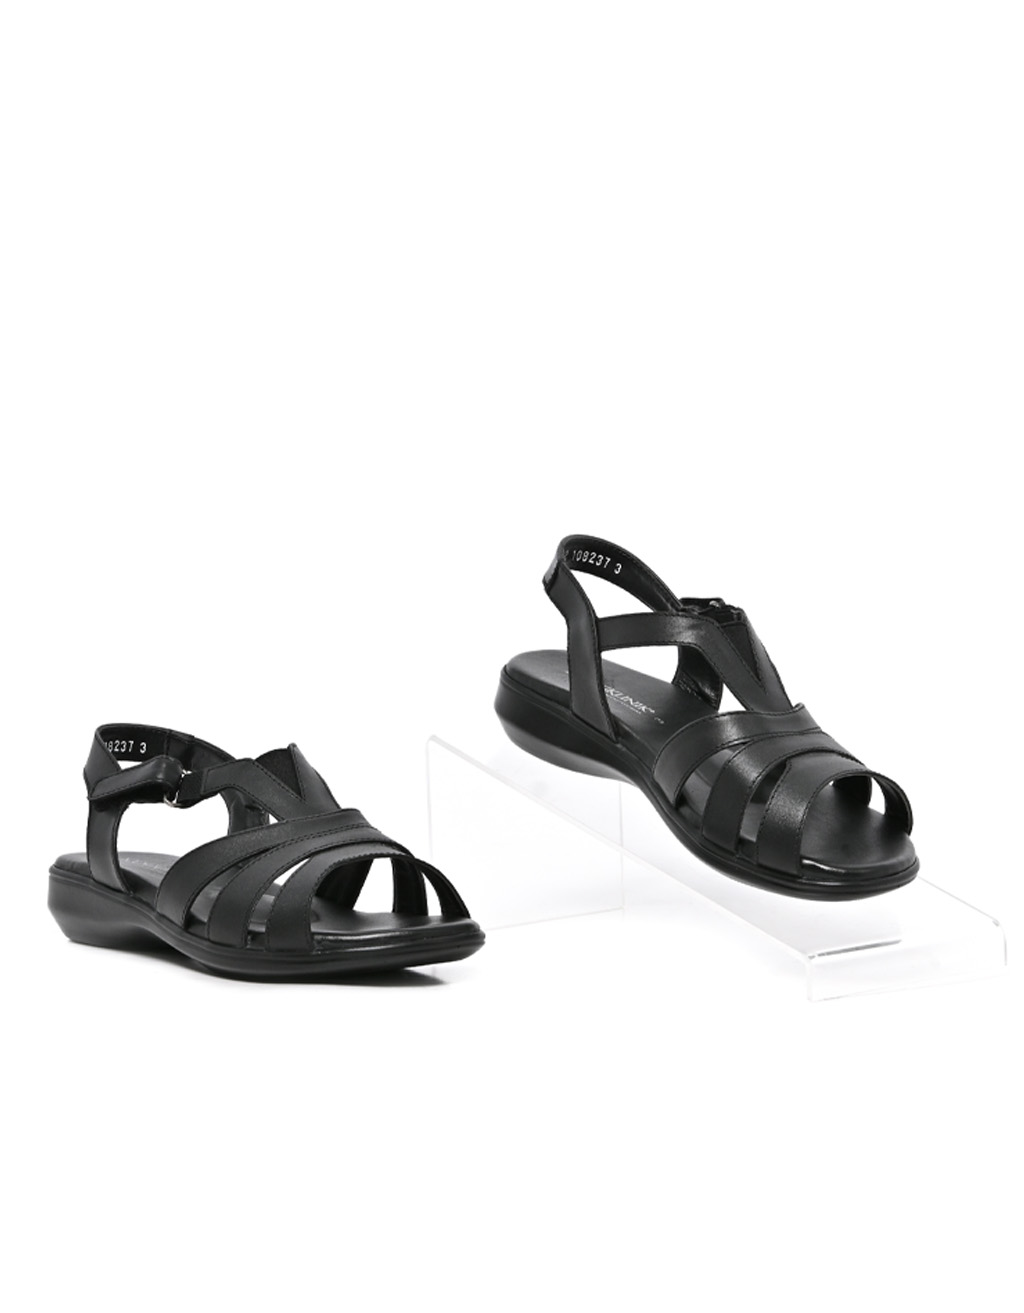 Ladies Young Klinik, Helen, Casual Black Sandals - Bolton Shoes